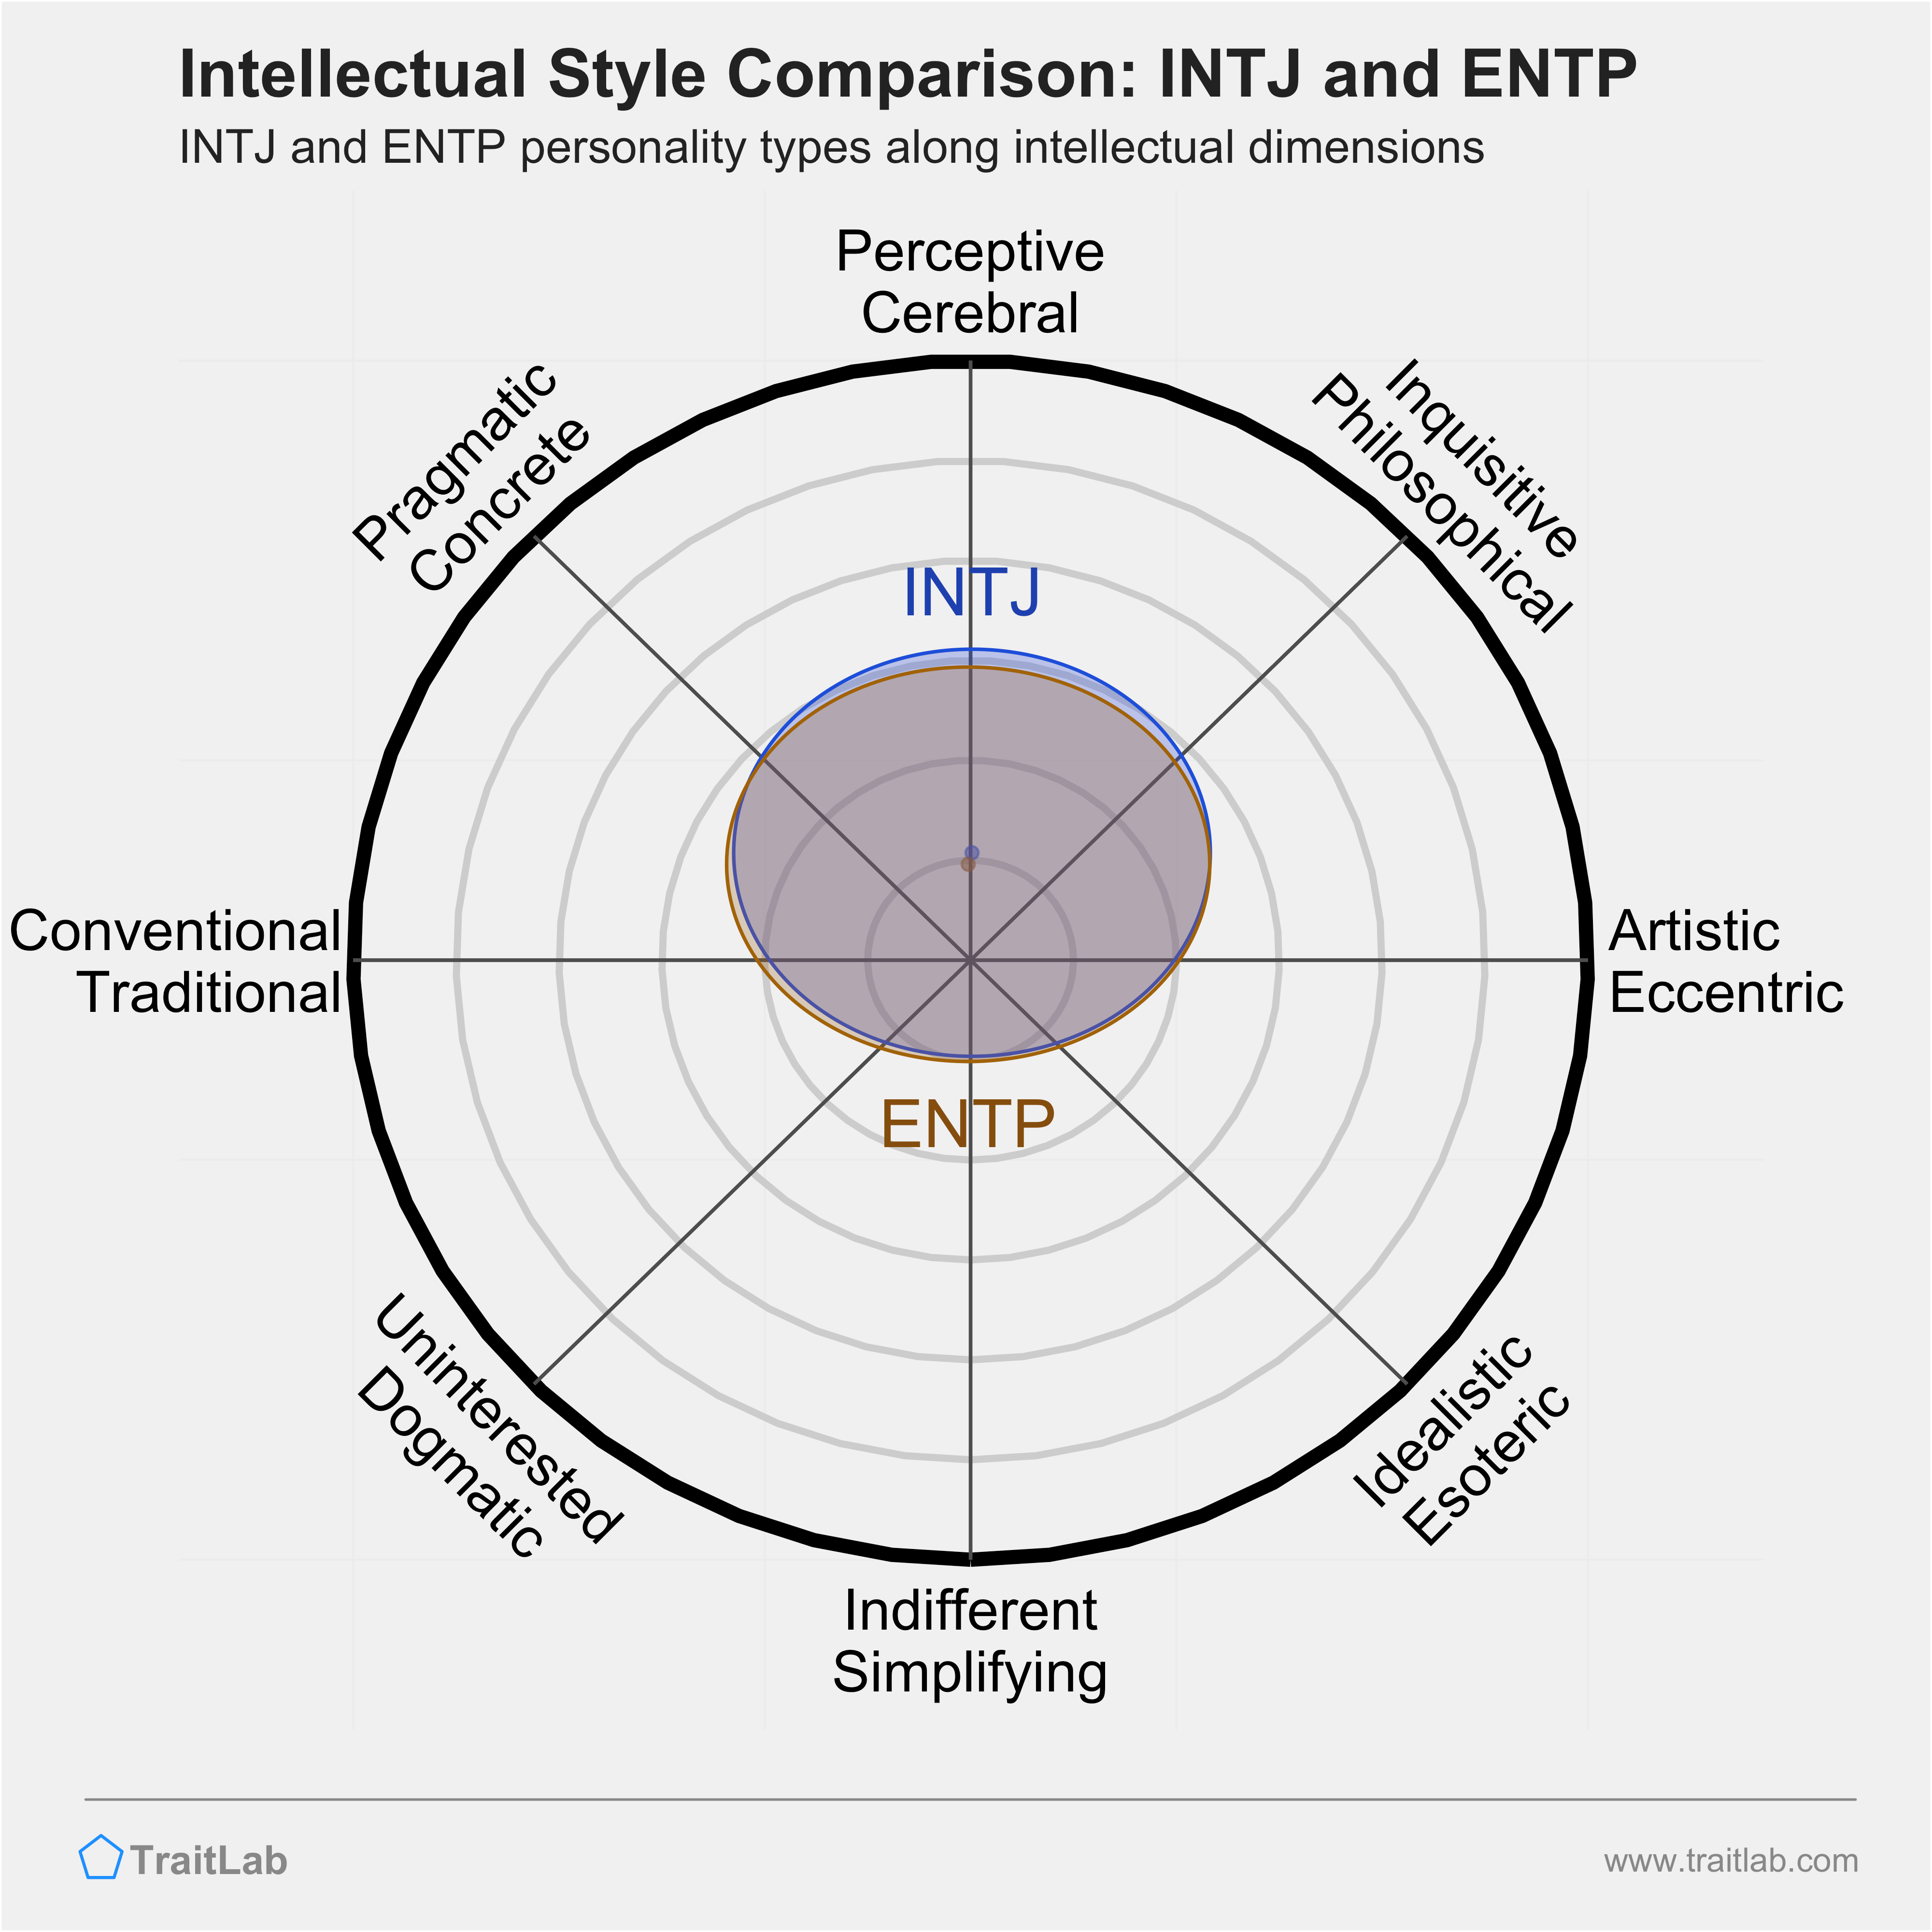 INTJ and ENTP comparison across intellectual dimensions